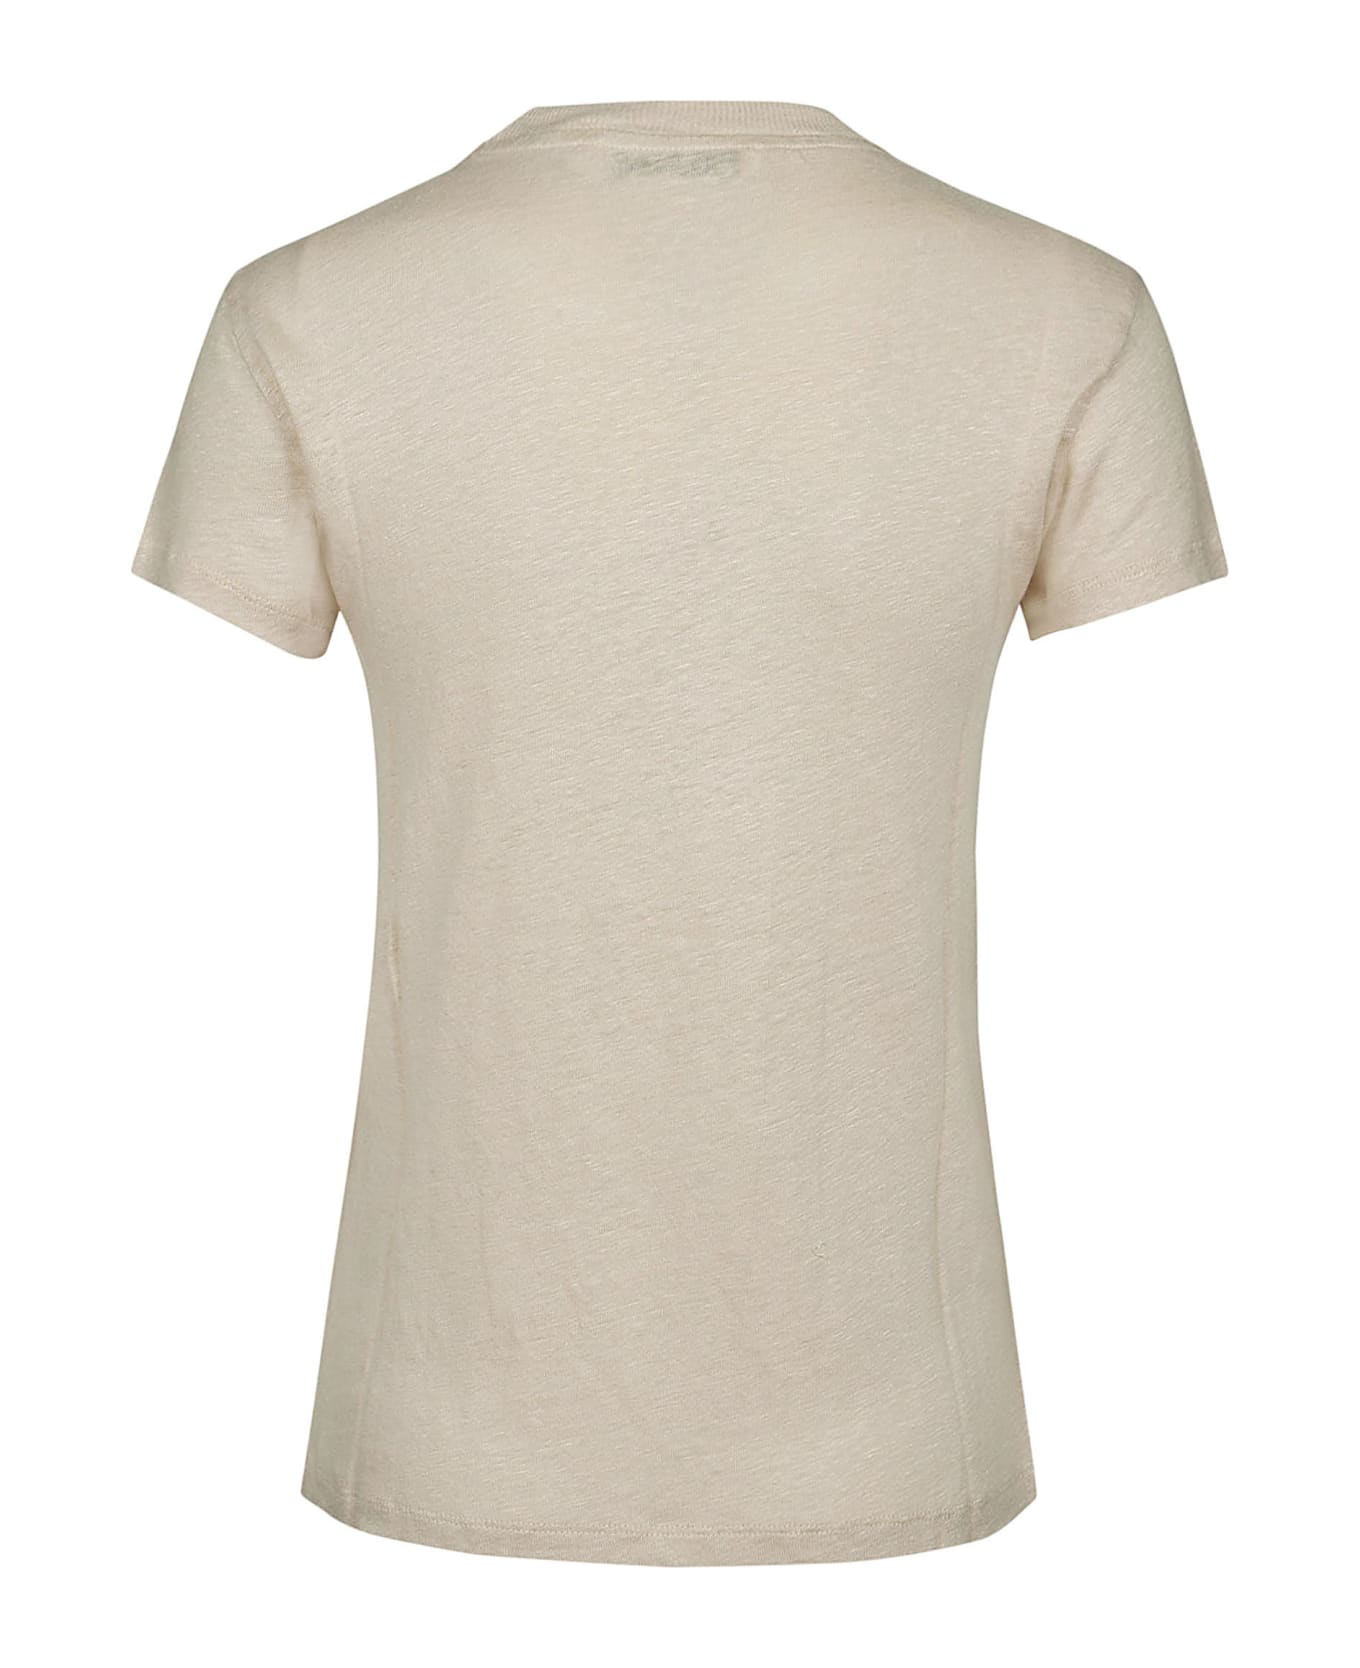 IRO Third T-shirt - Light Beige Tシャツ